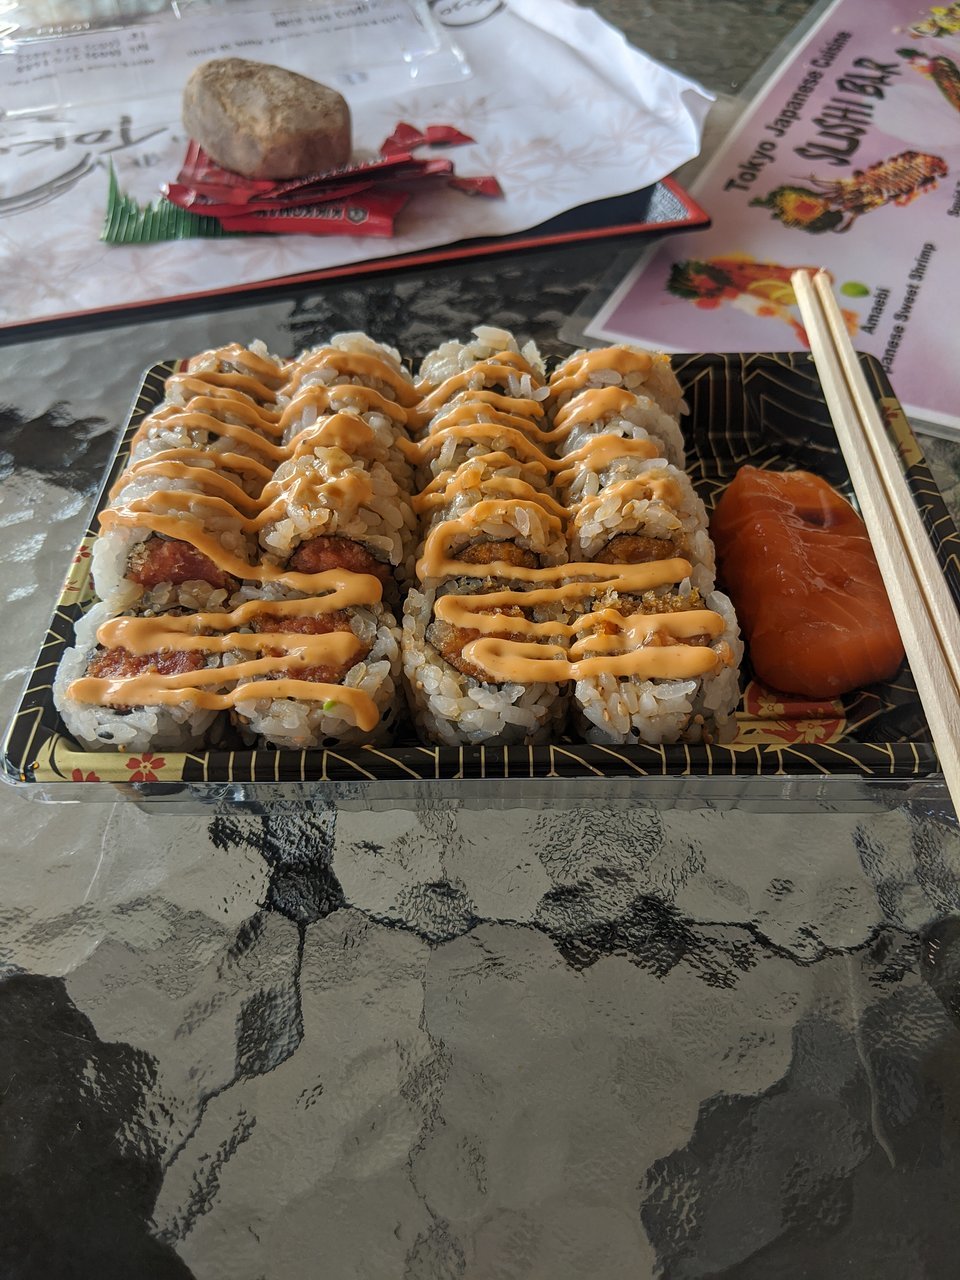 Tokyo Japanese Cuisine